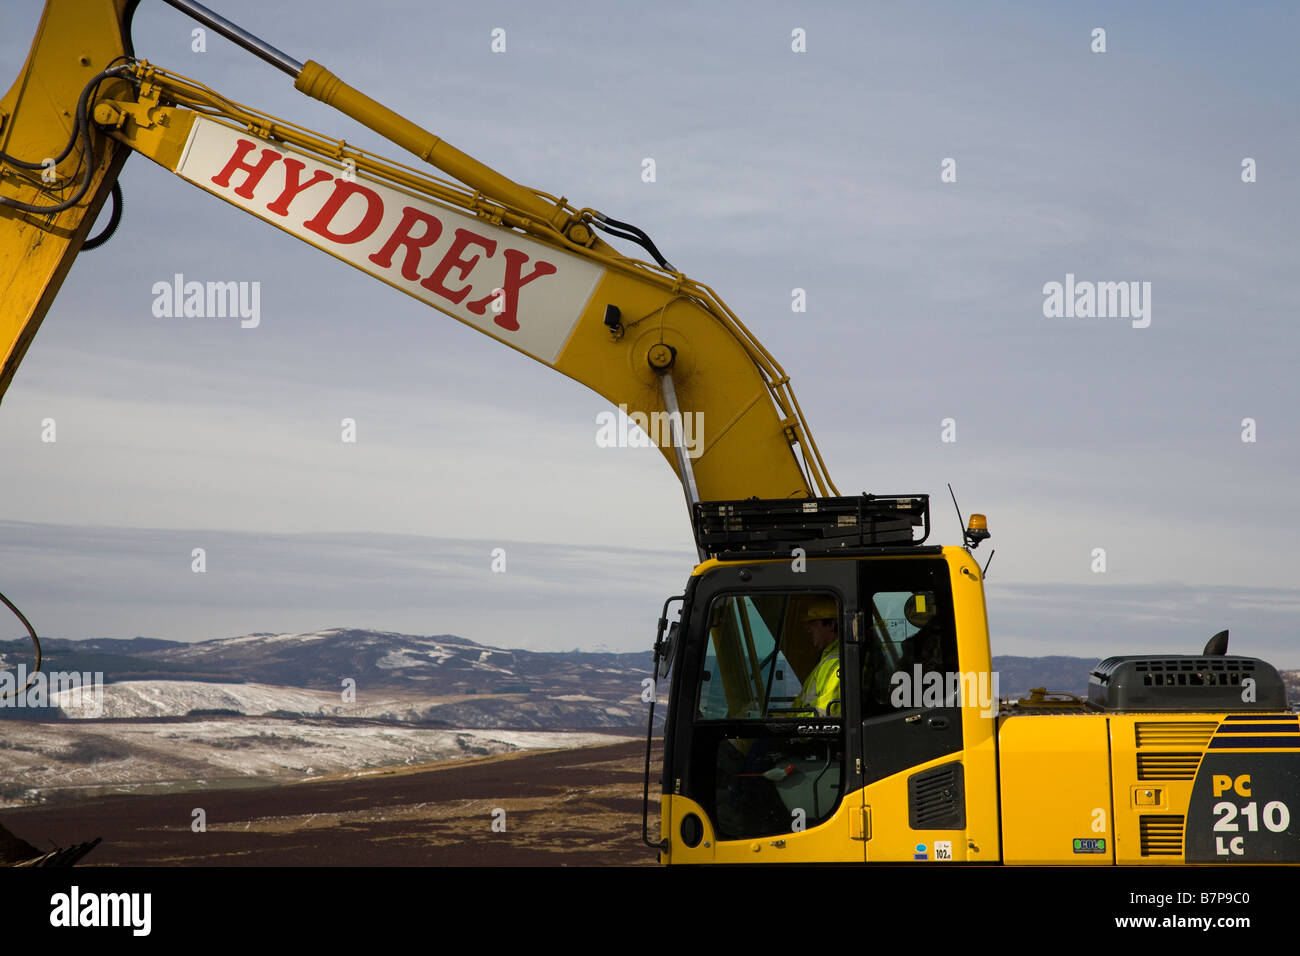 Giant excavator a Hydrex De-Stoner JCB Type vehicle at Alyth Windfarm, Blairgowrie Scotland uk Stock Photo